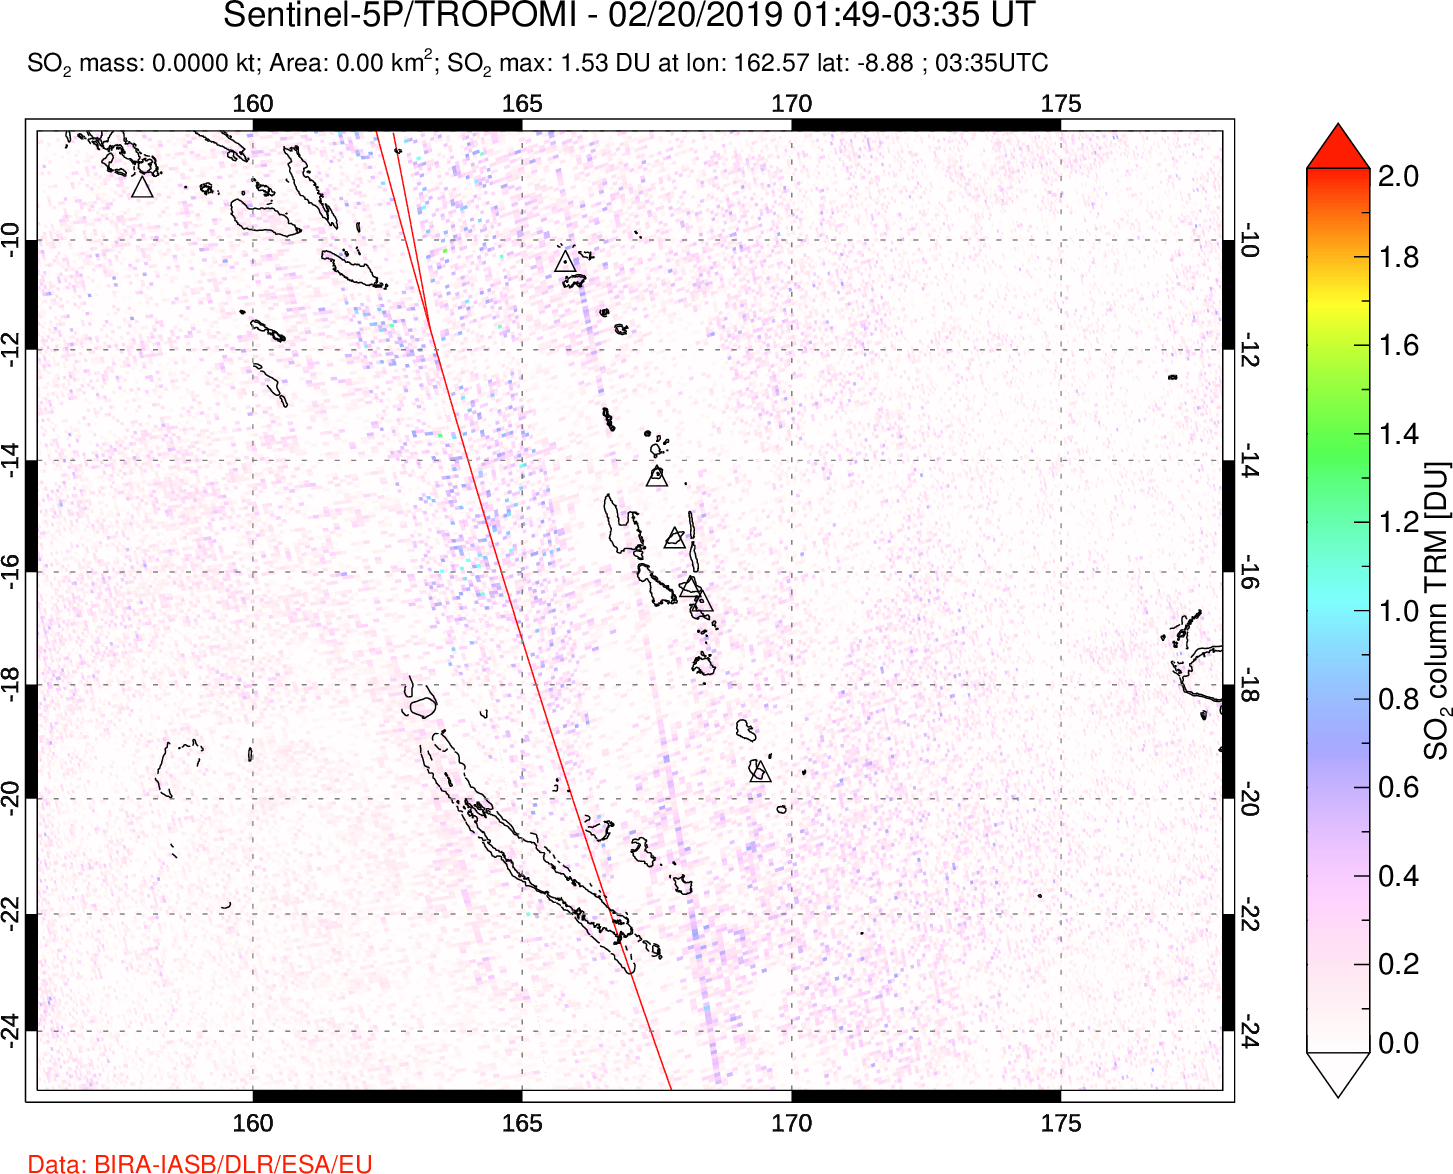 A sulfur dioxide image over Vanuatu, South Pacific on Feb 20, 2019.